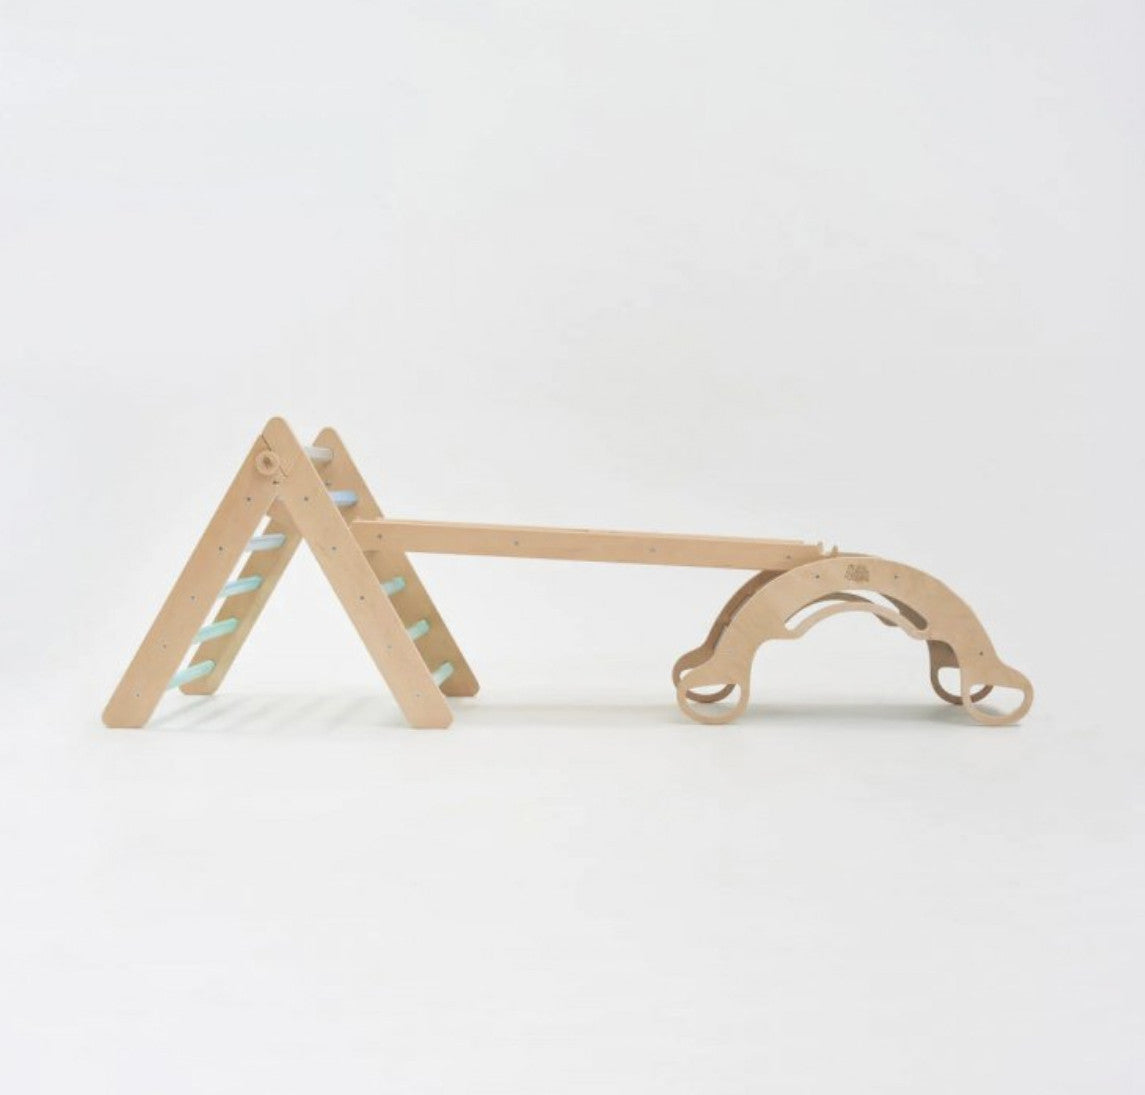 Leiter + doppelseitiges Brett + Schaukelset aus Holz - Farbe Minze